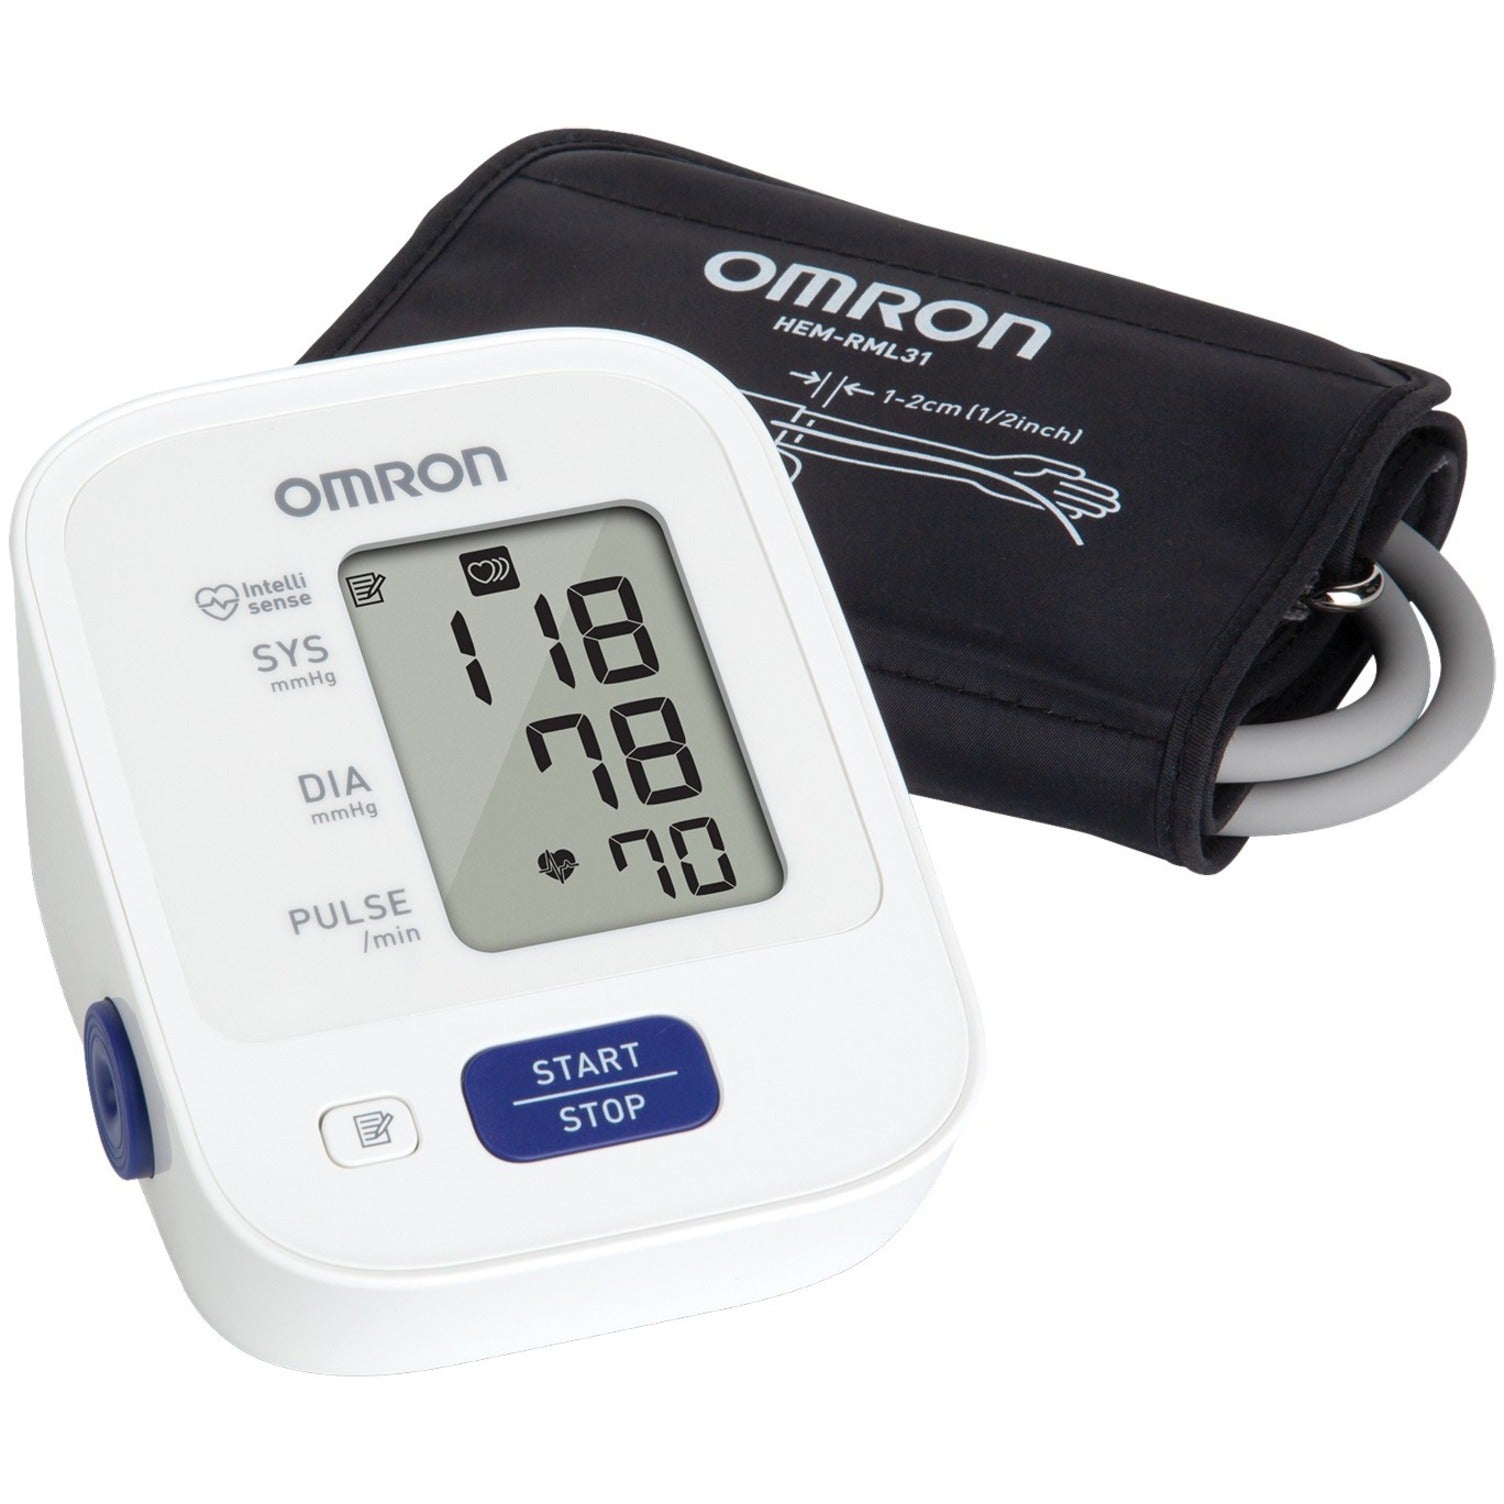 Omron BP7100 3 Series Upper Arm Blood Pressure Monitor, Memory Storage, Irregular Heartbeat Detection, Easy-to-read Display